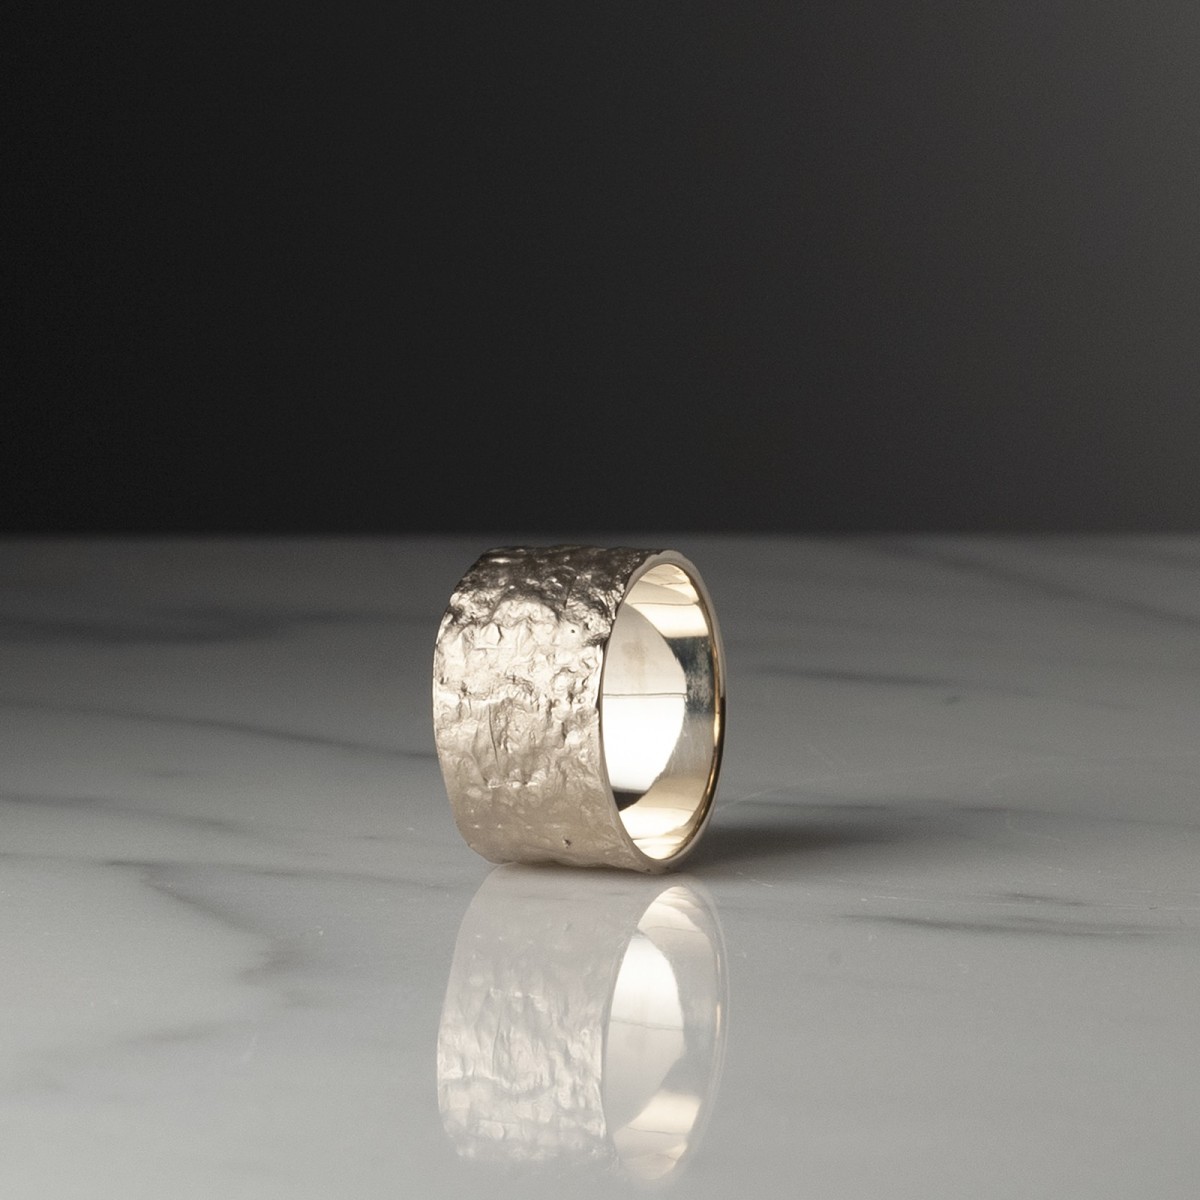 SKIN H LARGE 2139 - Ring handmade in France